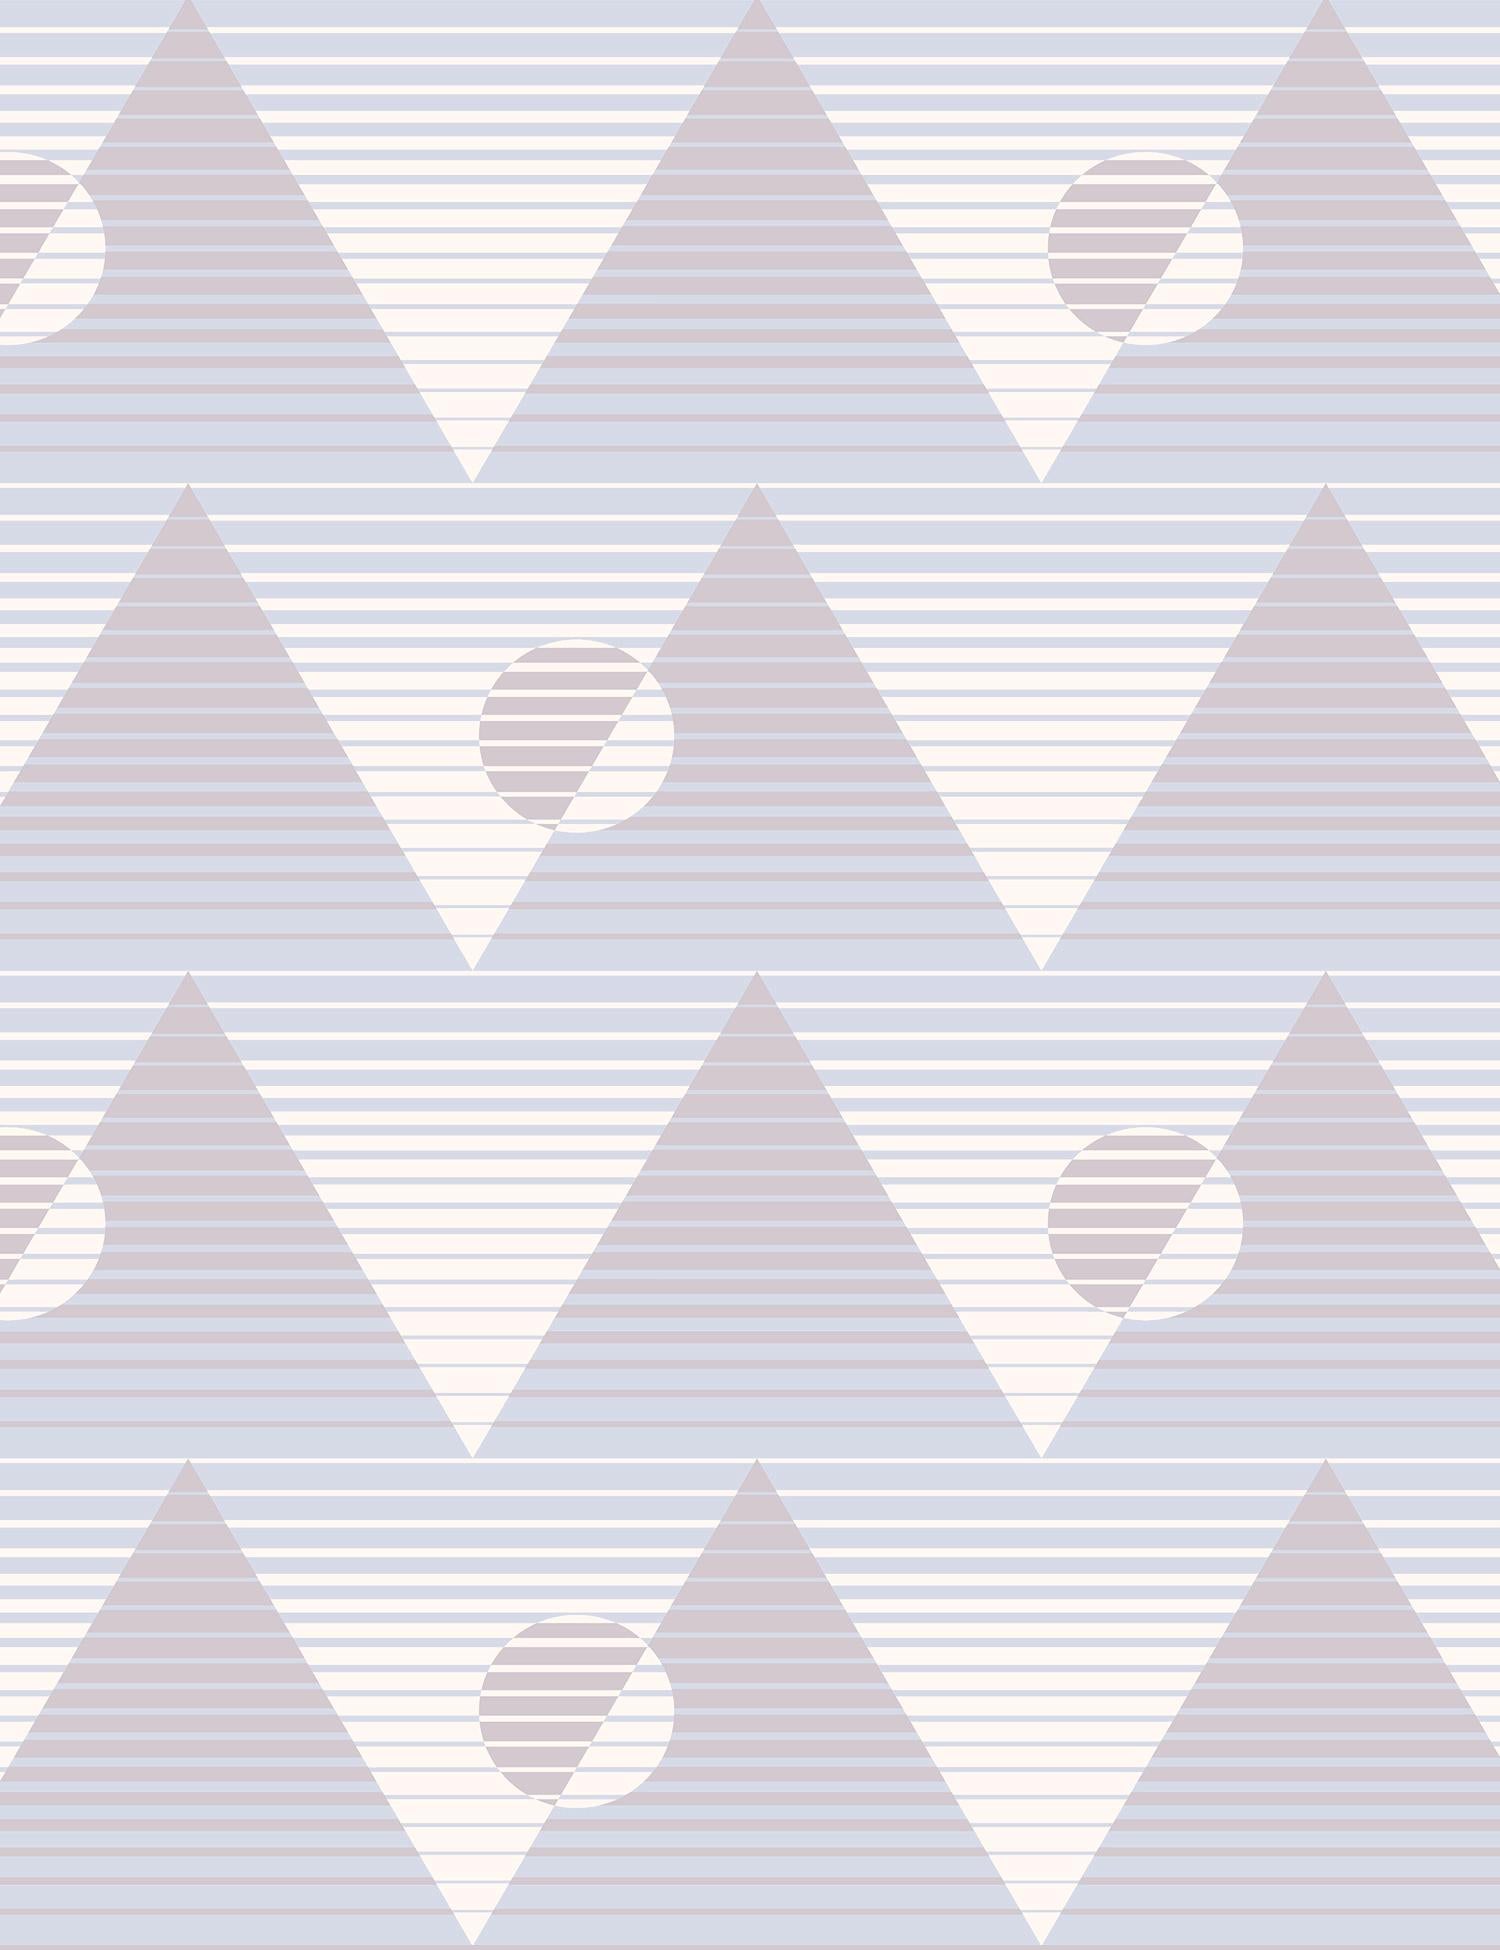 Bohemian Pyramide du Soleil Designer Wallpaper in Juno 'Dusty Mauve, Blue and Blush' For Sale